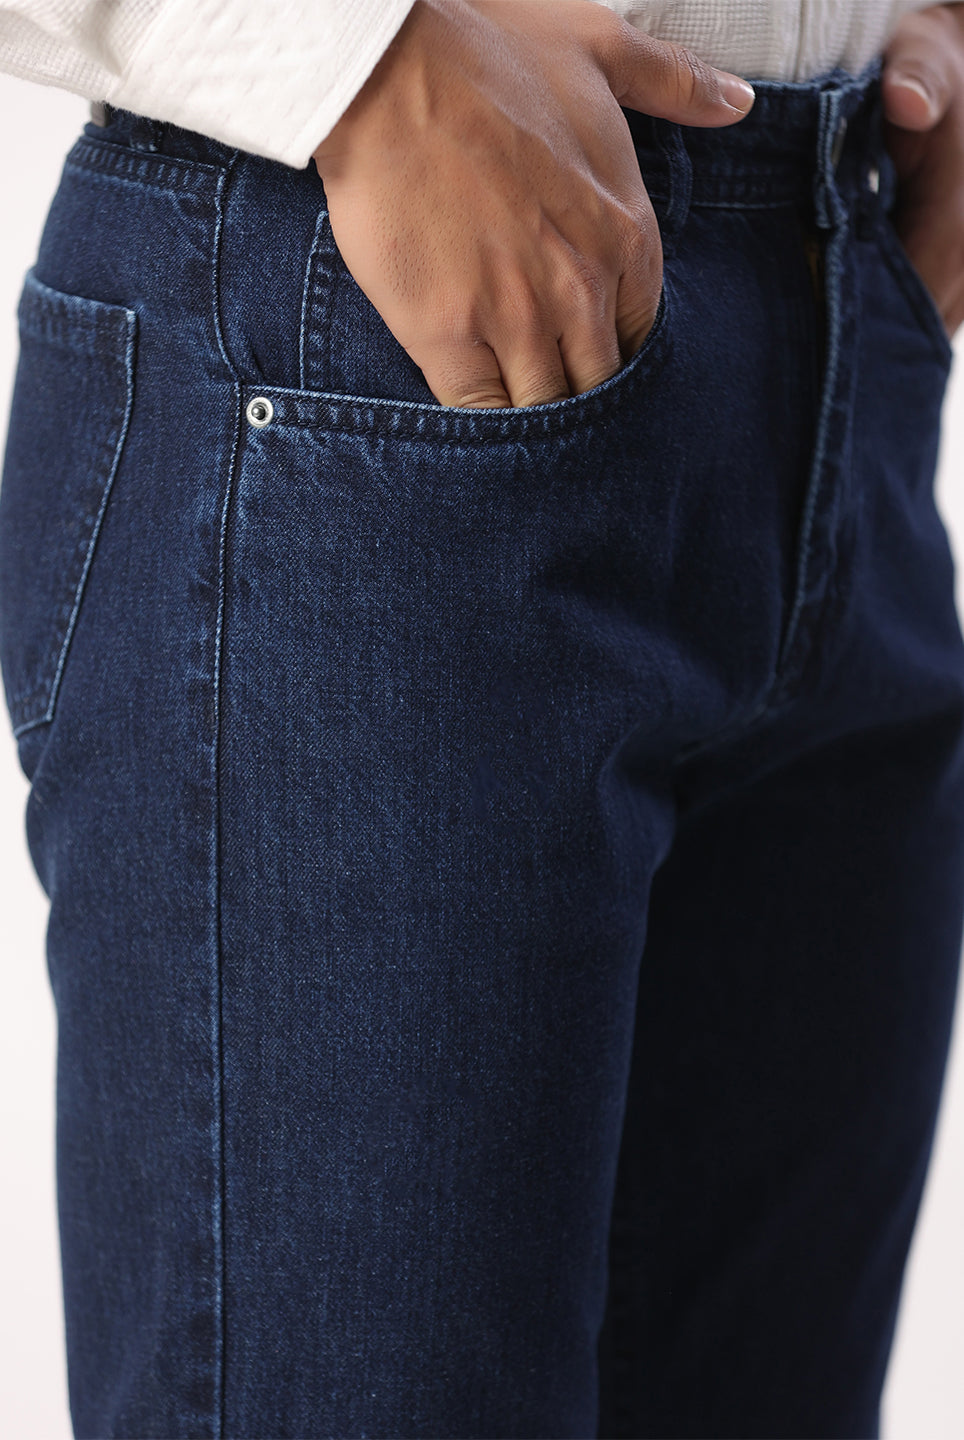 denim bootcut jeans